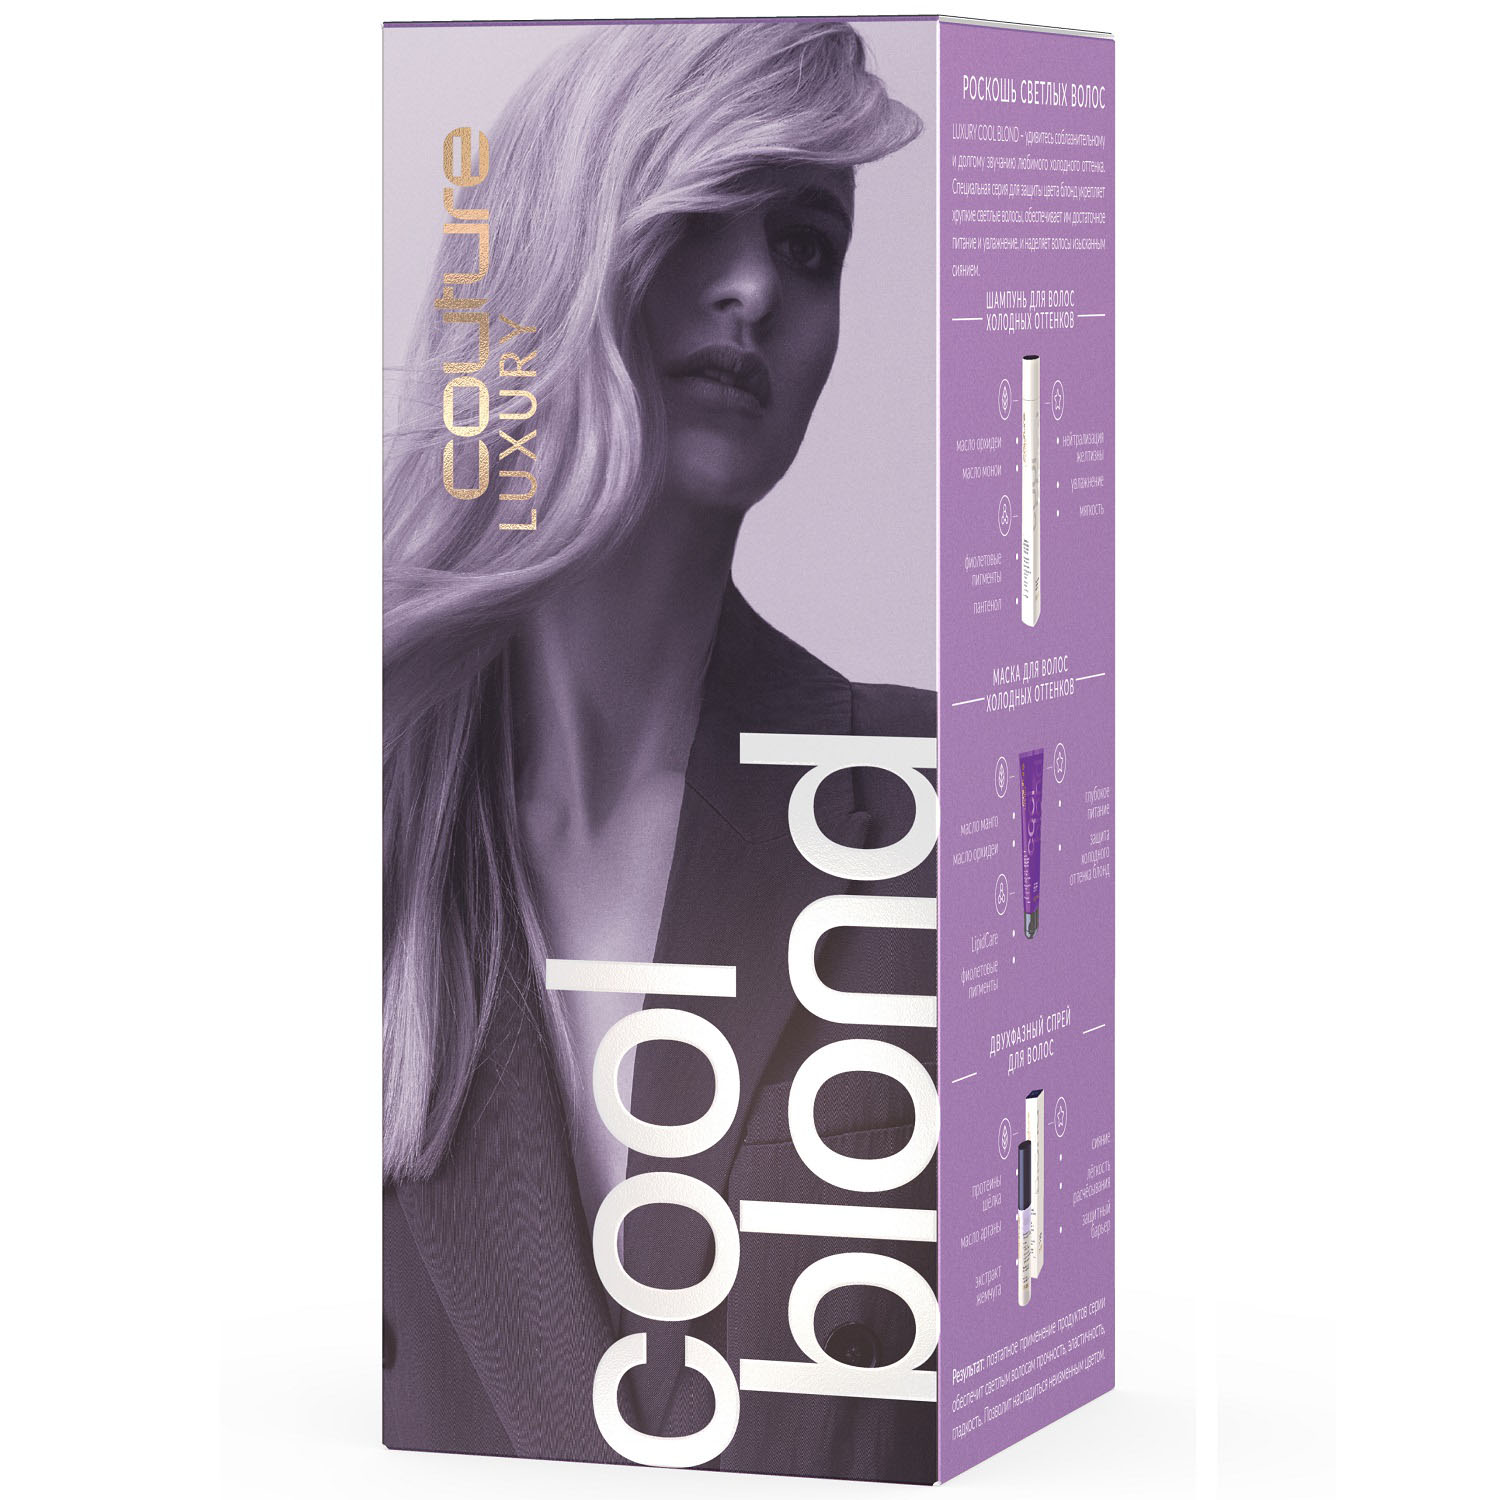 Estel Набор Cool Blond: шампунь 300 мл + маска 200 мл + двухфазный спрей 100 мл (Estel, Haute Couture) набор дорожный blond on the go для светлых волос